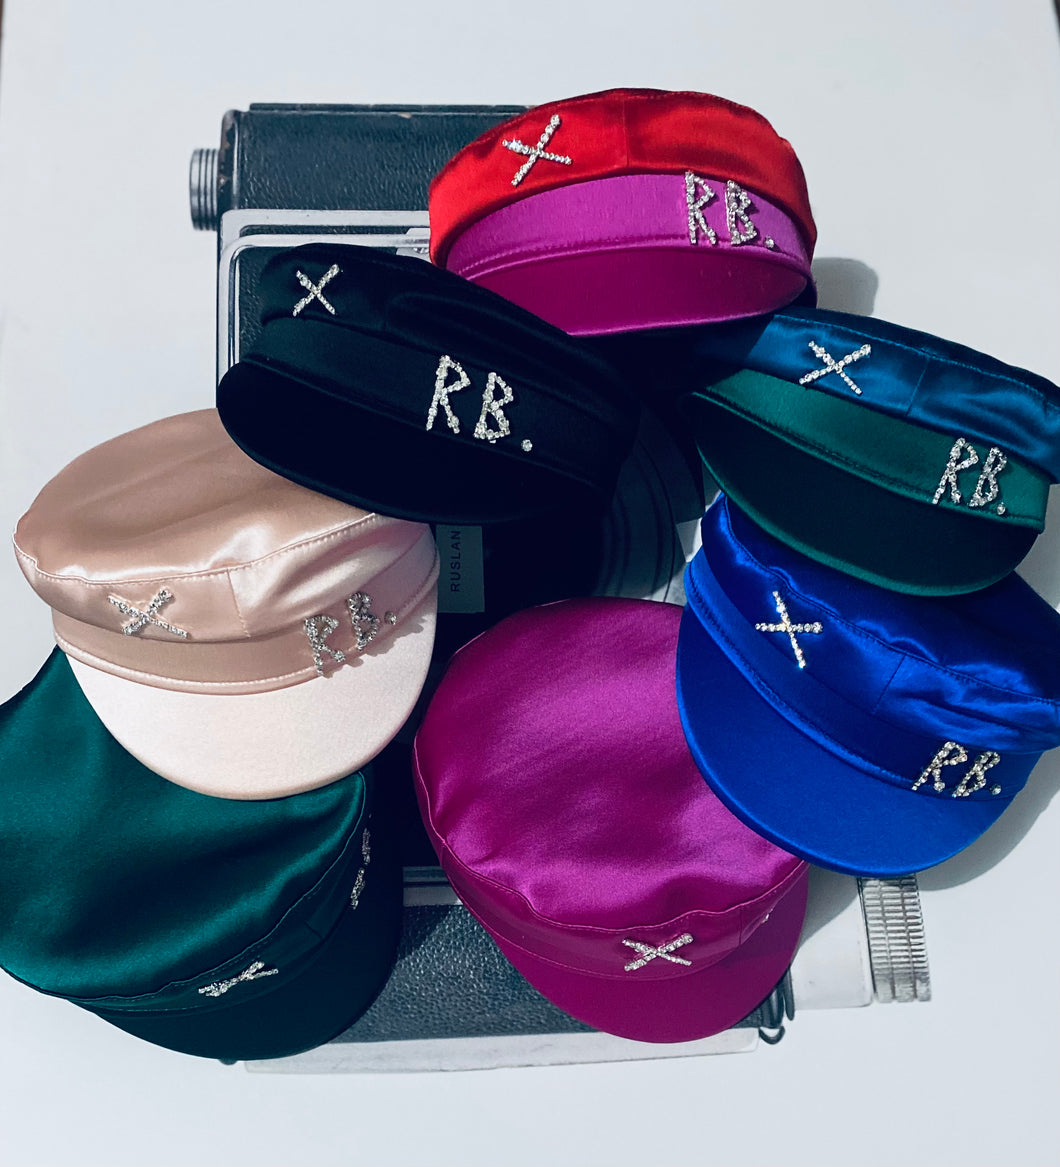 RB Hats